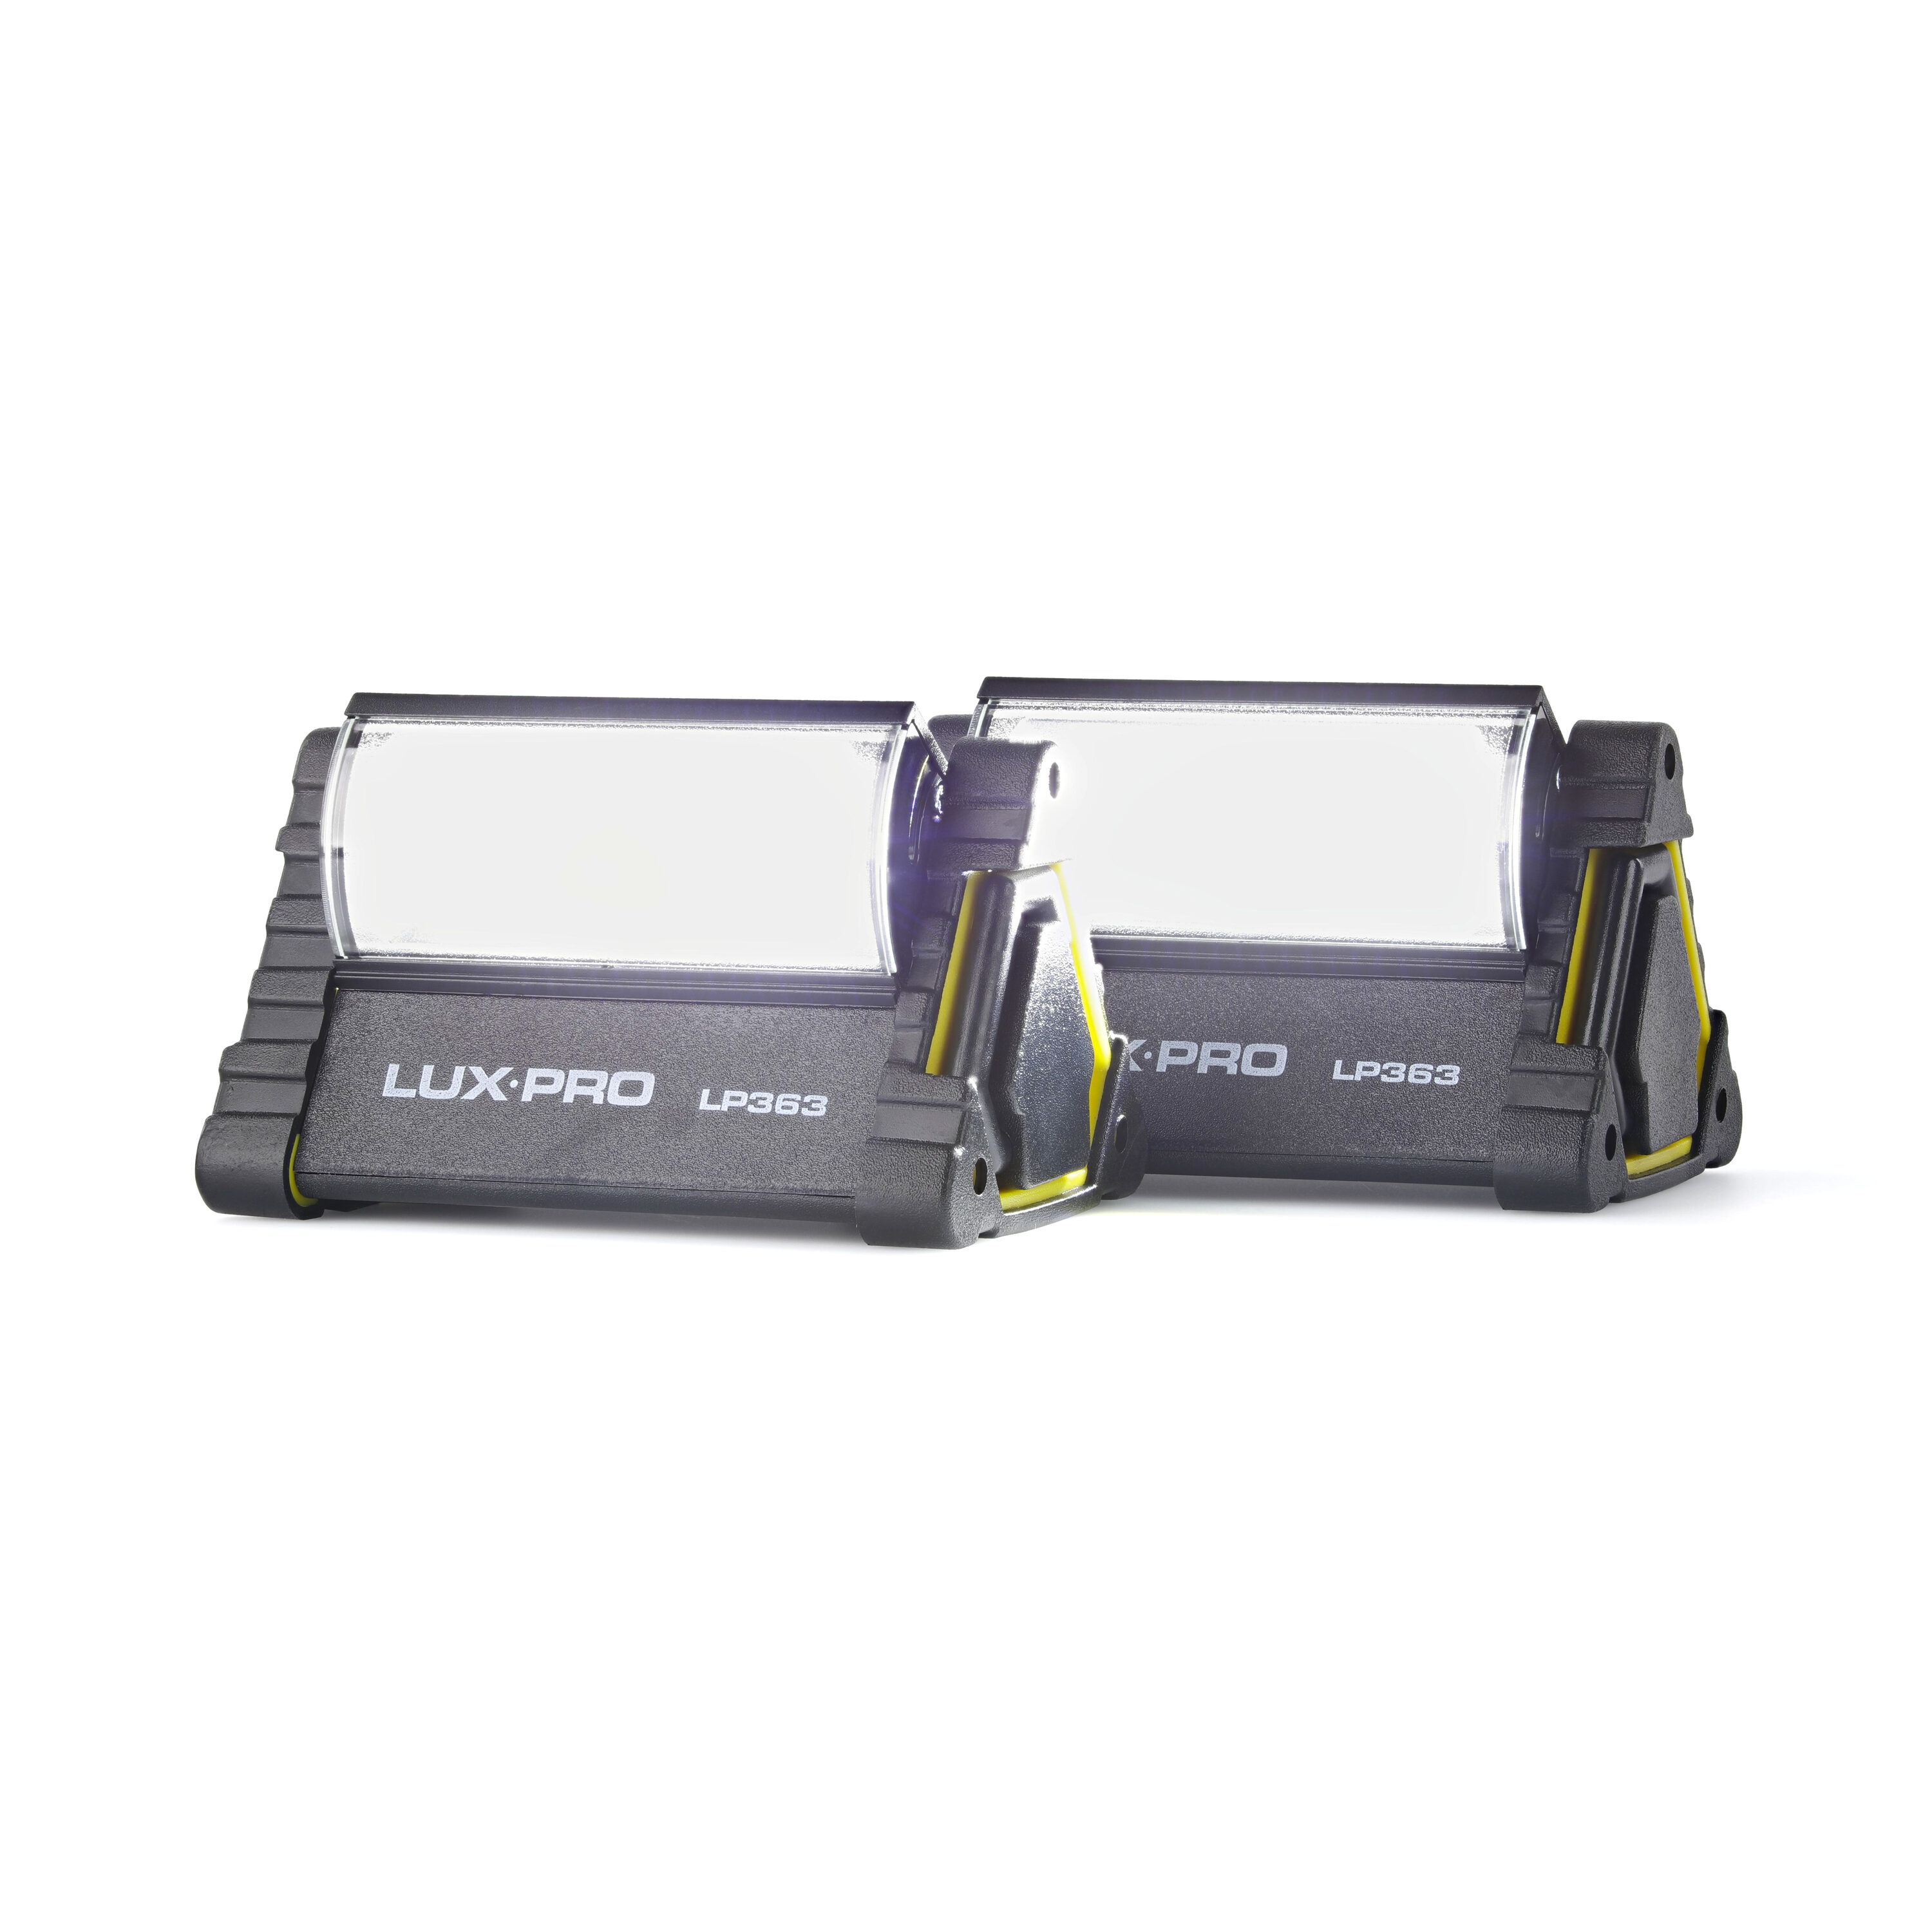 Lux-Pro Luxpro 1000 LM Broadbeam Lantern - Black, LED, Battery